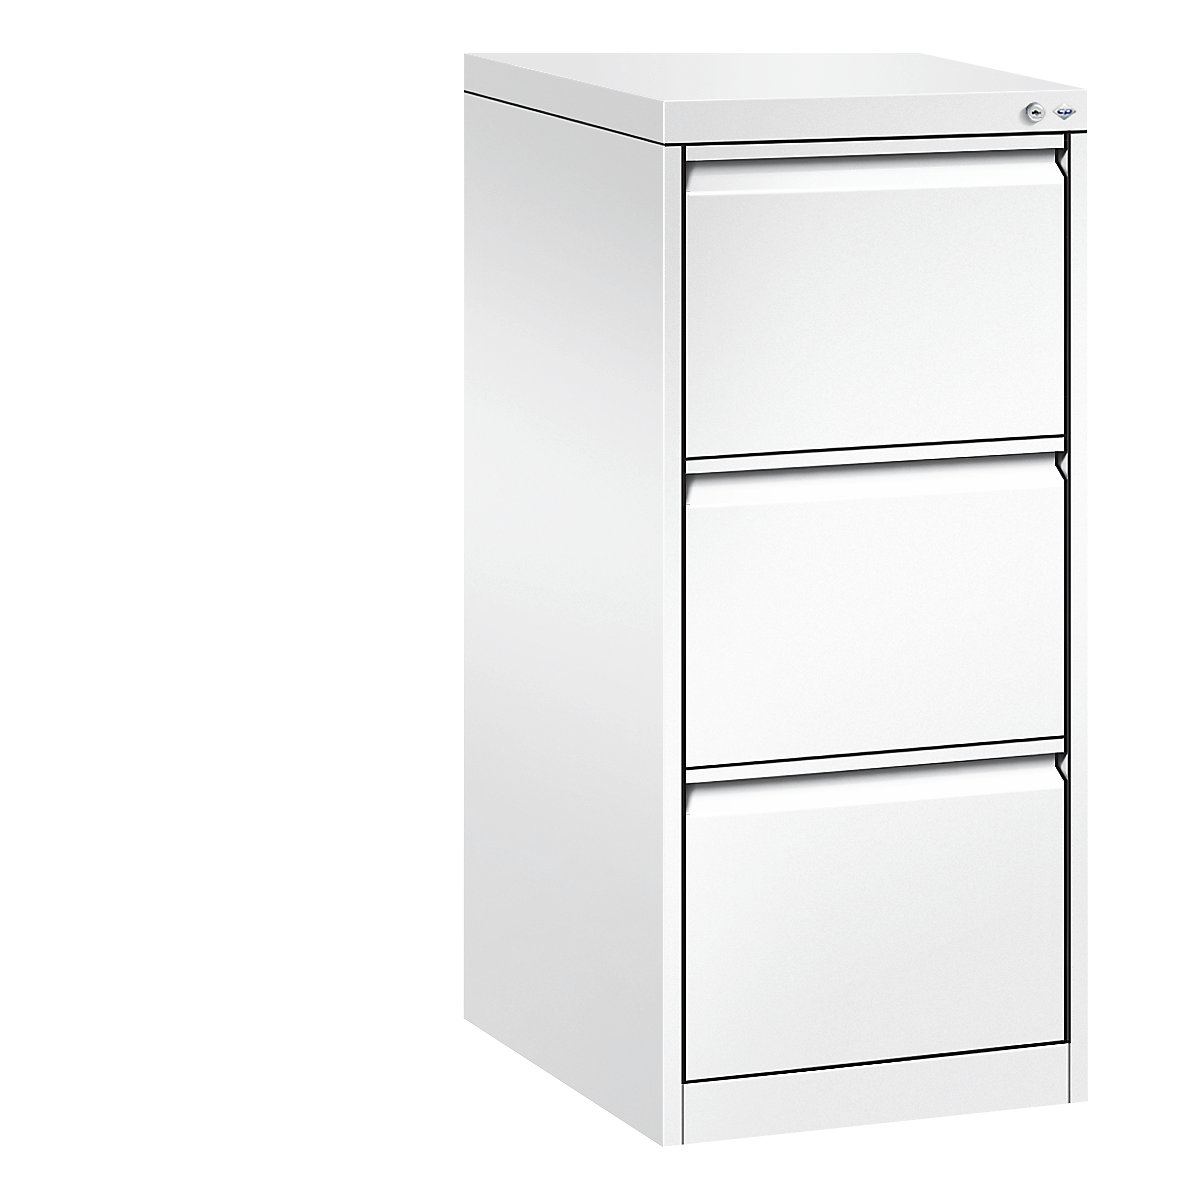 C+P – ACURADO suspension filing cabinet, 1 track, 3 drawers, traffic white